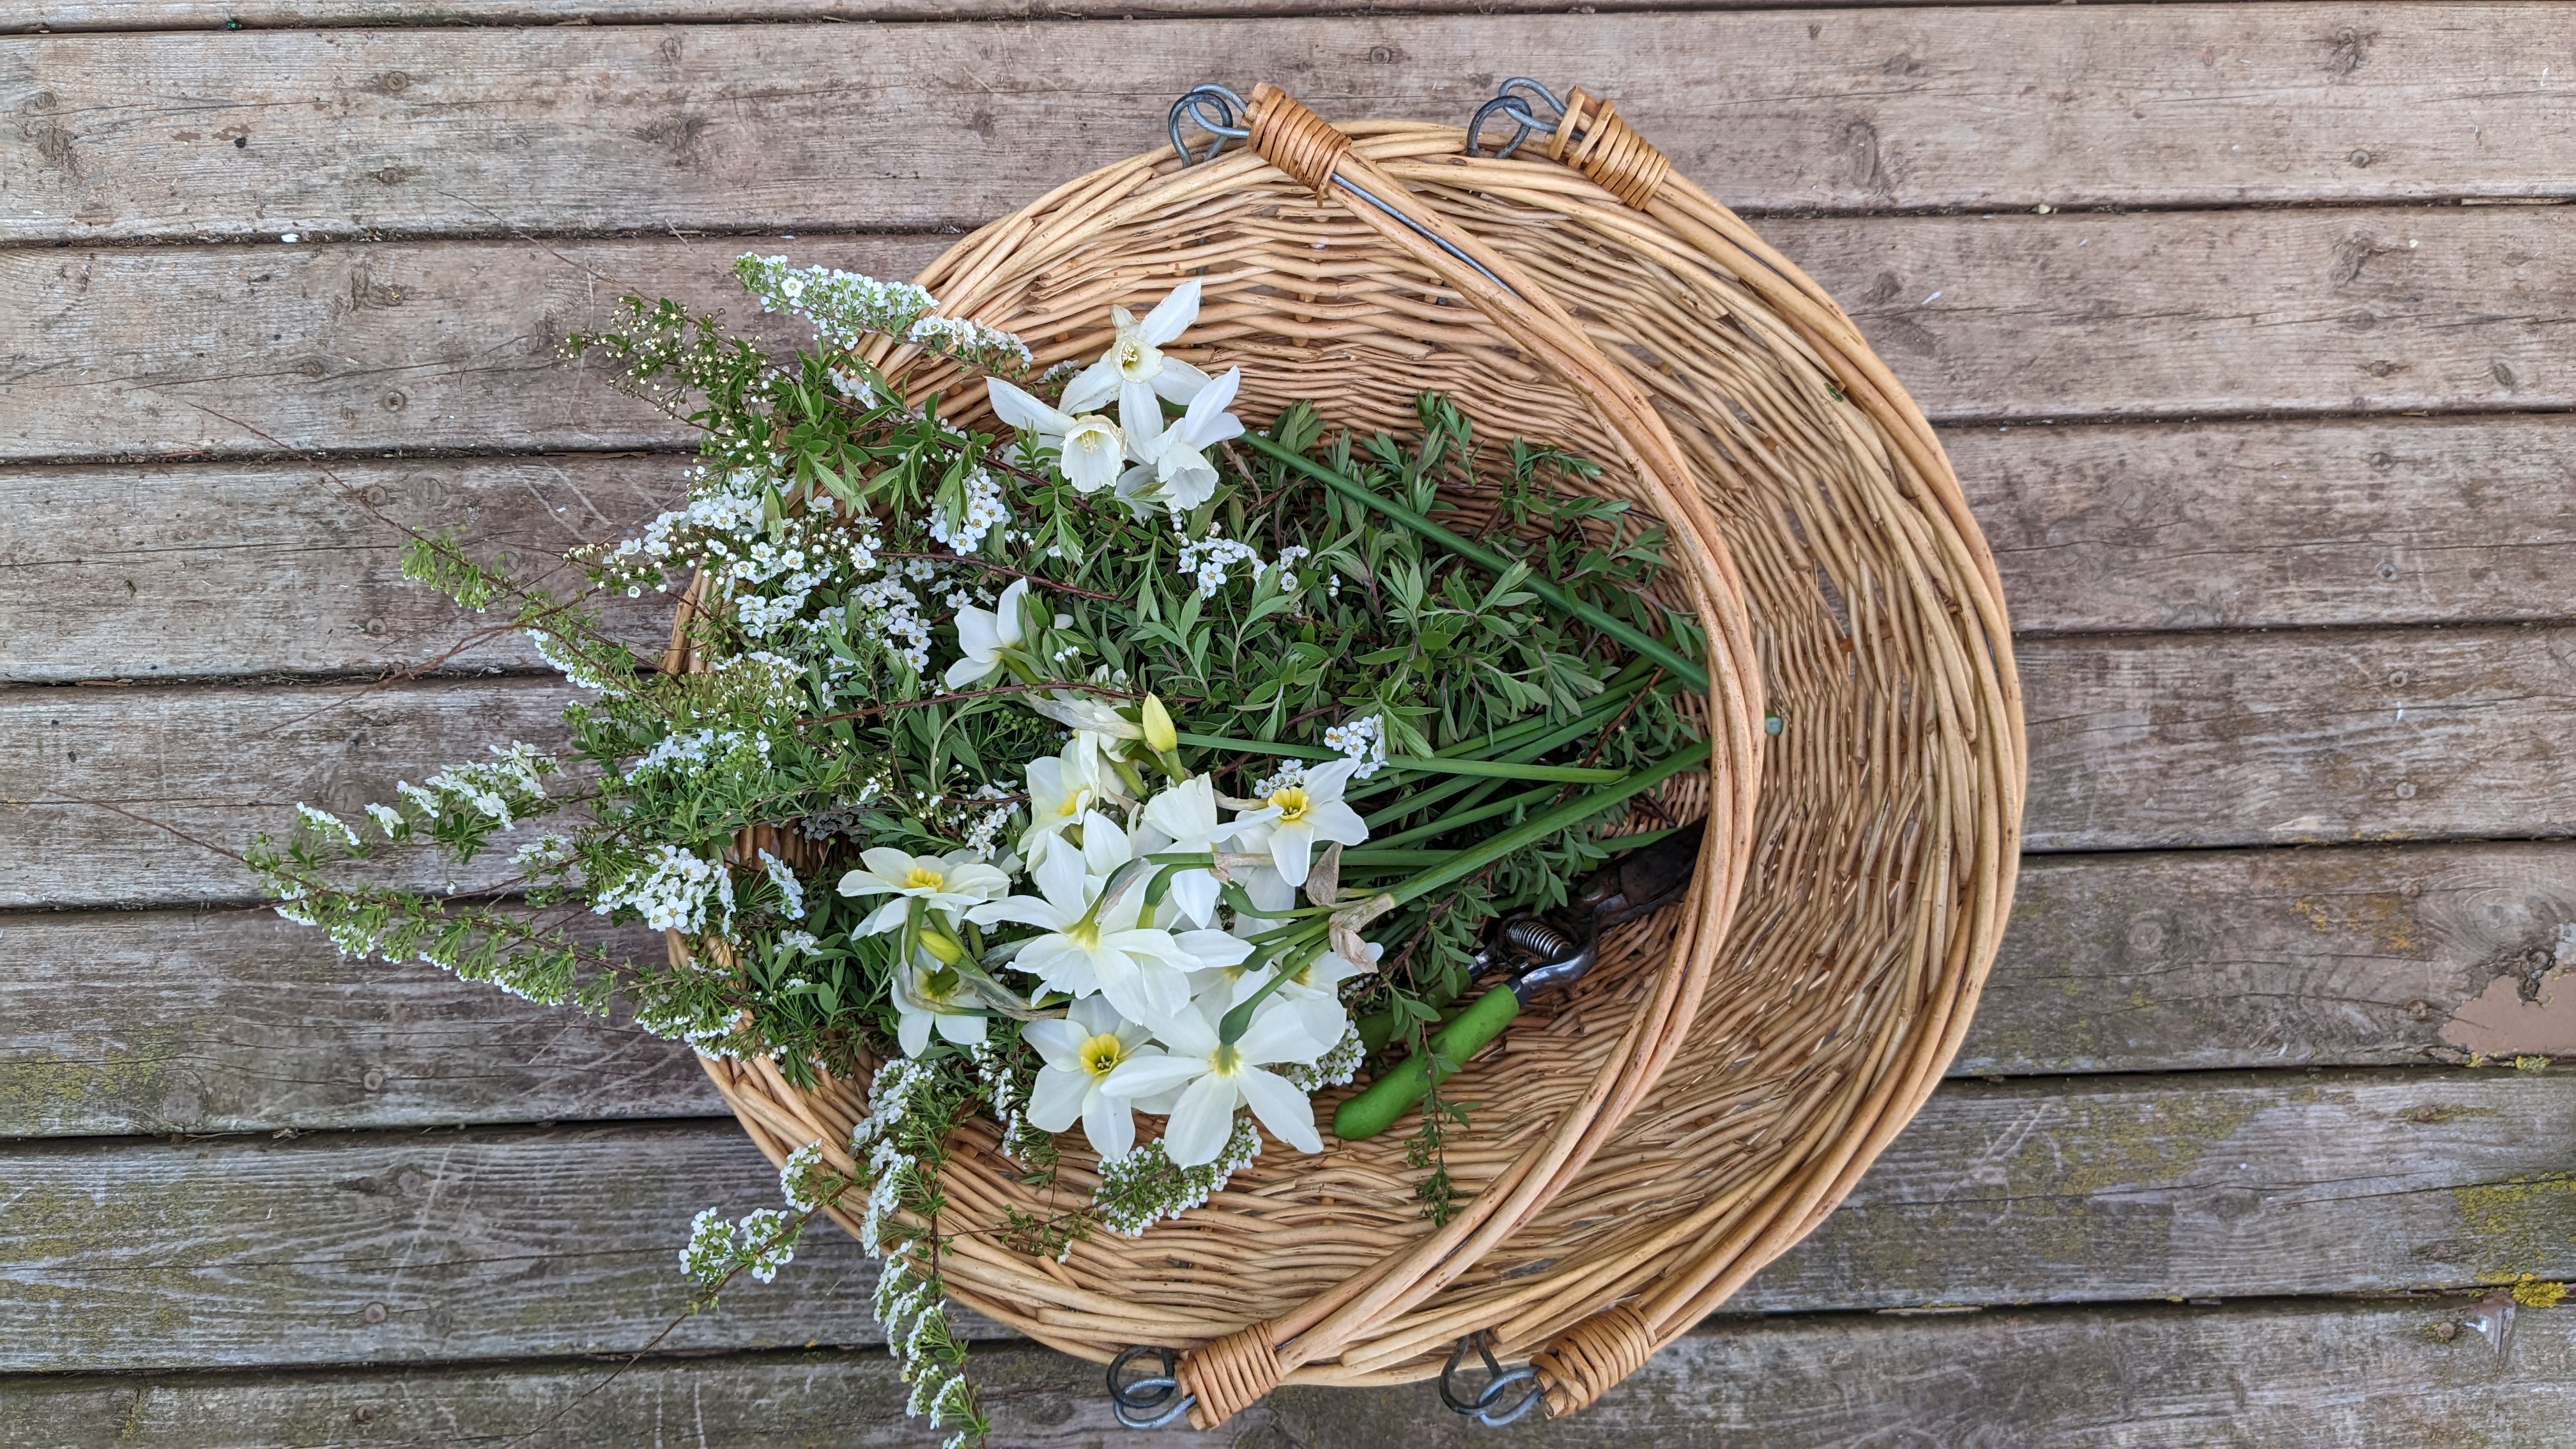 Basket of white flowers.